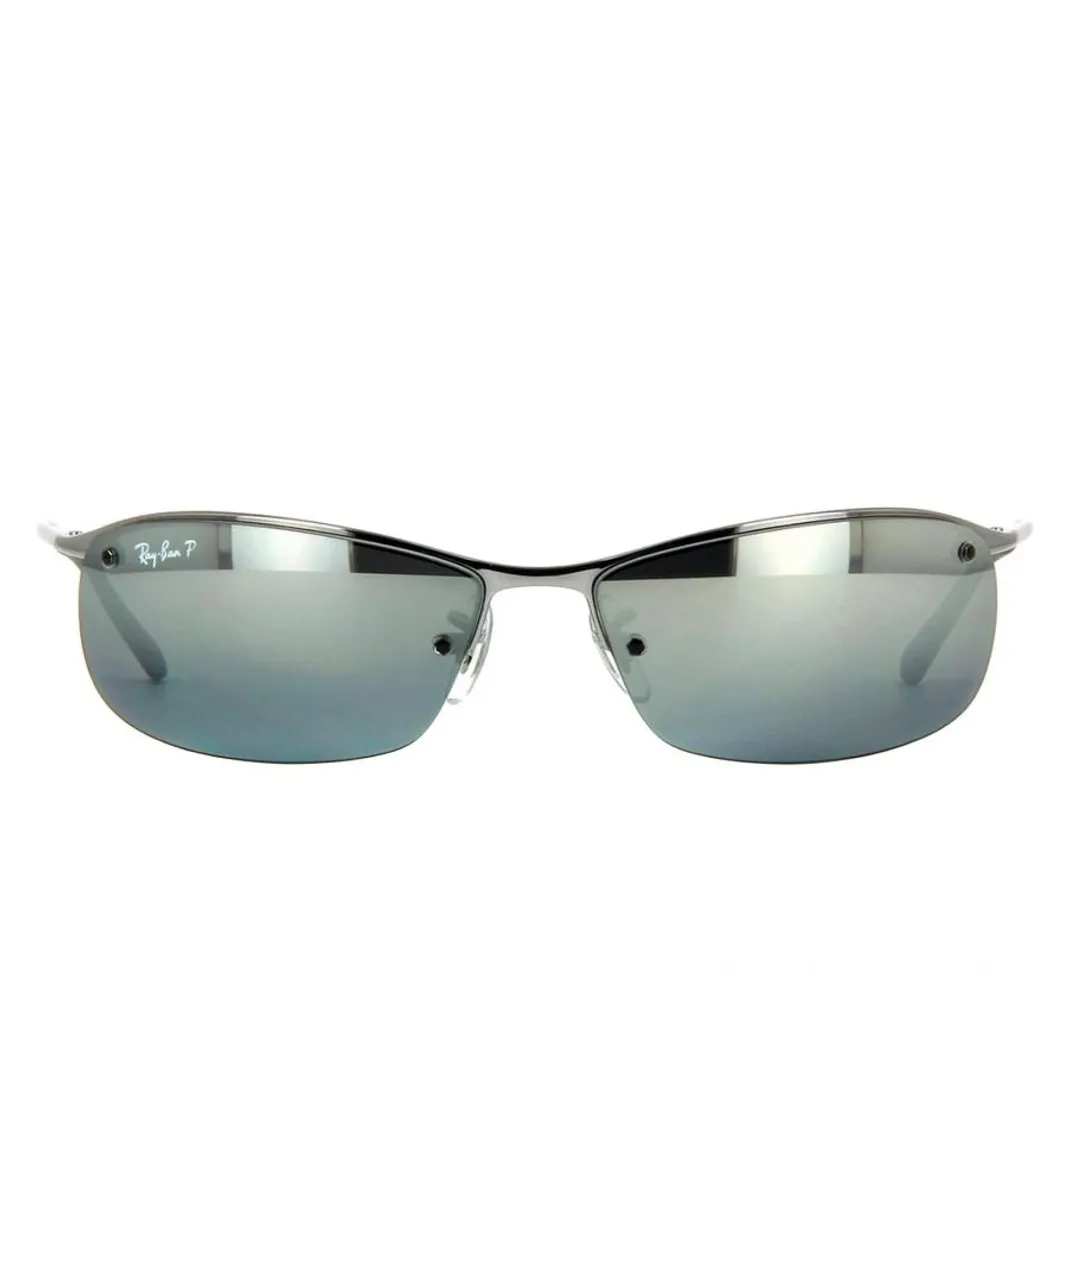 Ray-Ban Mens Sunglasses 3183 004 82 Gunmetal Silver Mirror Polarized - Grey - One